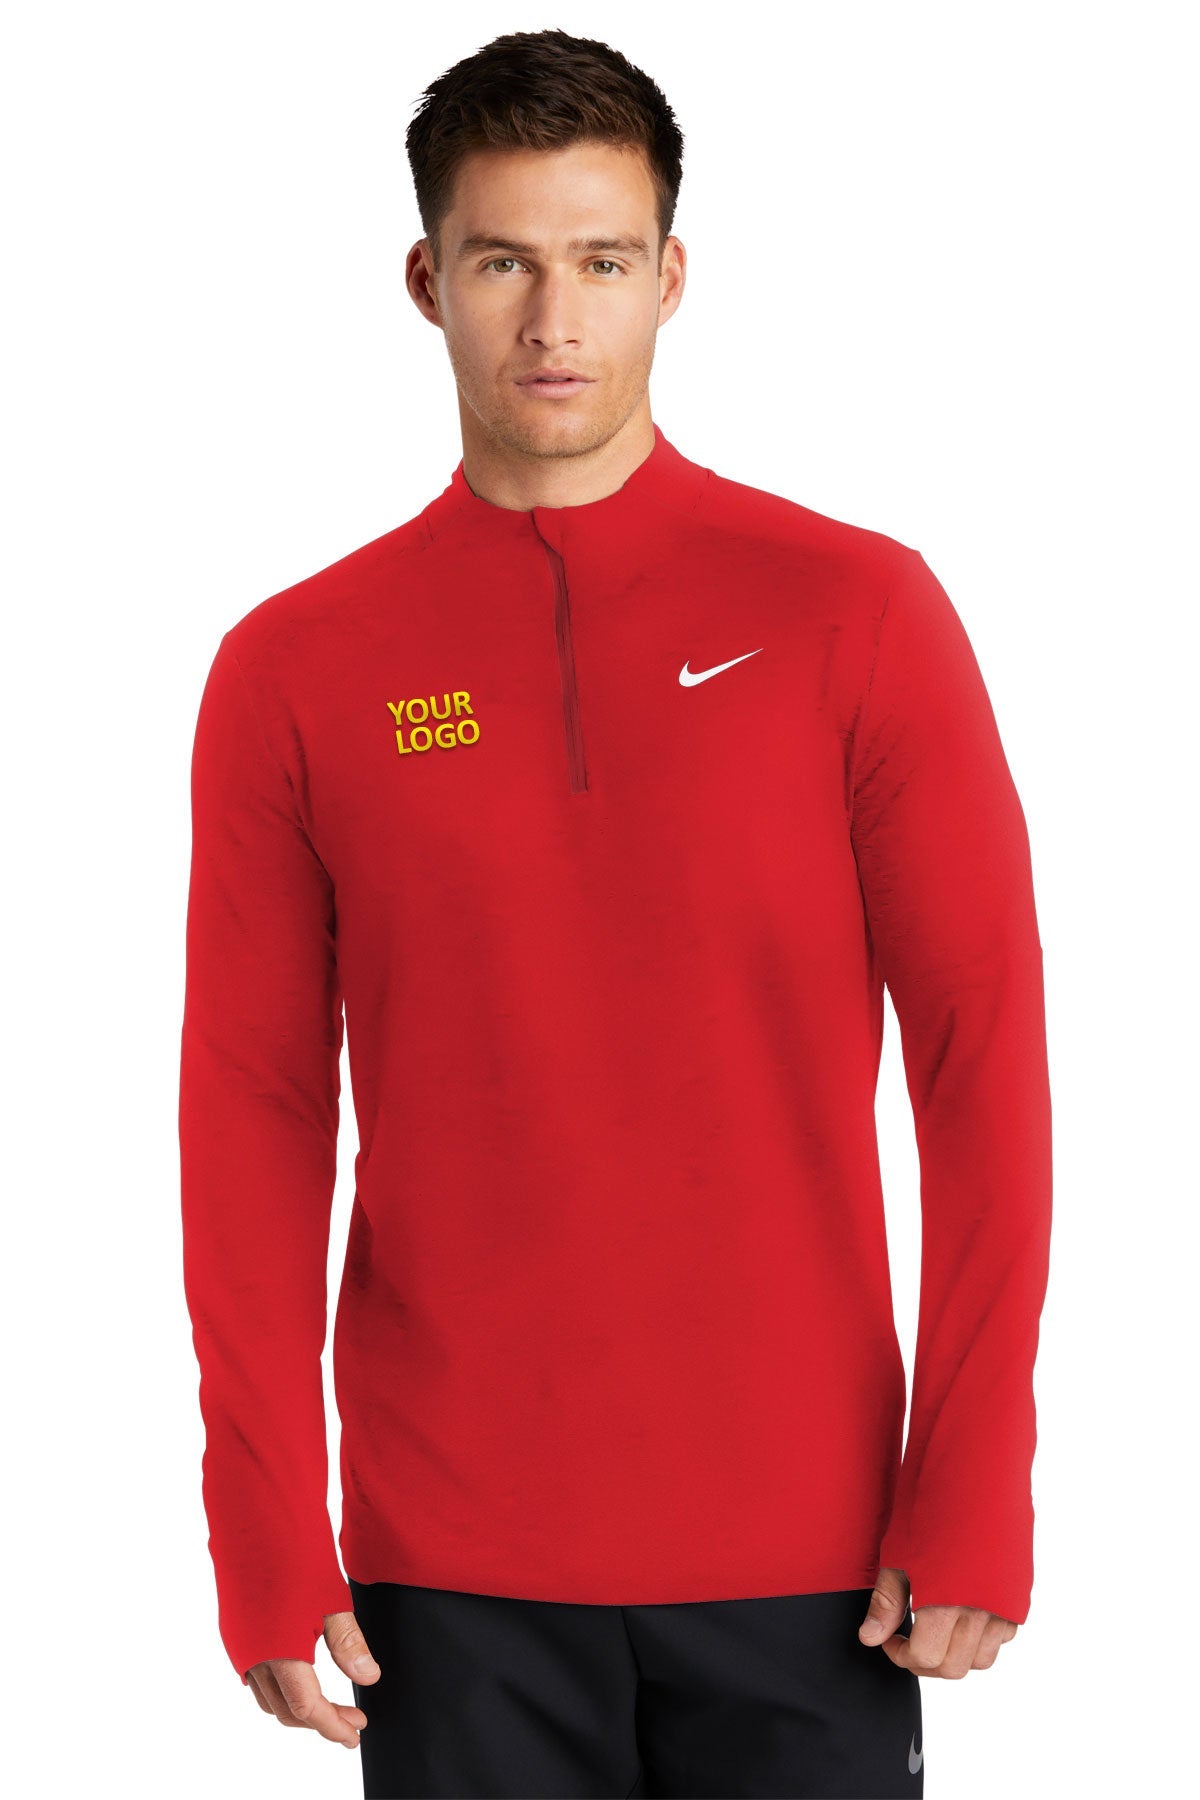 Nike Scarlet NKDH4949 business sweatshirts with logo